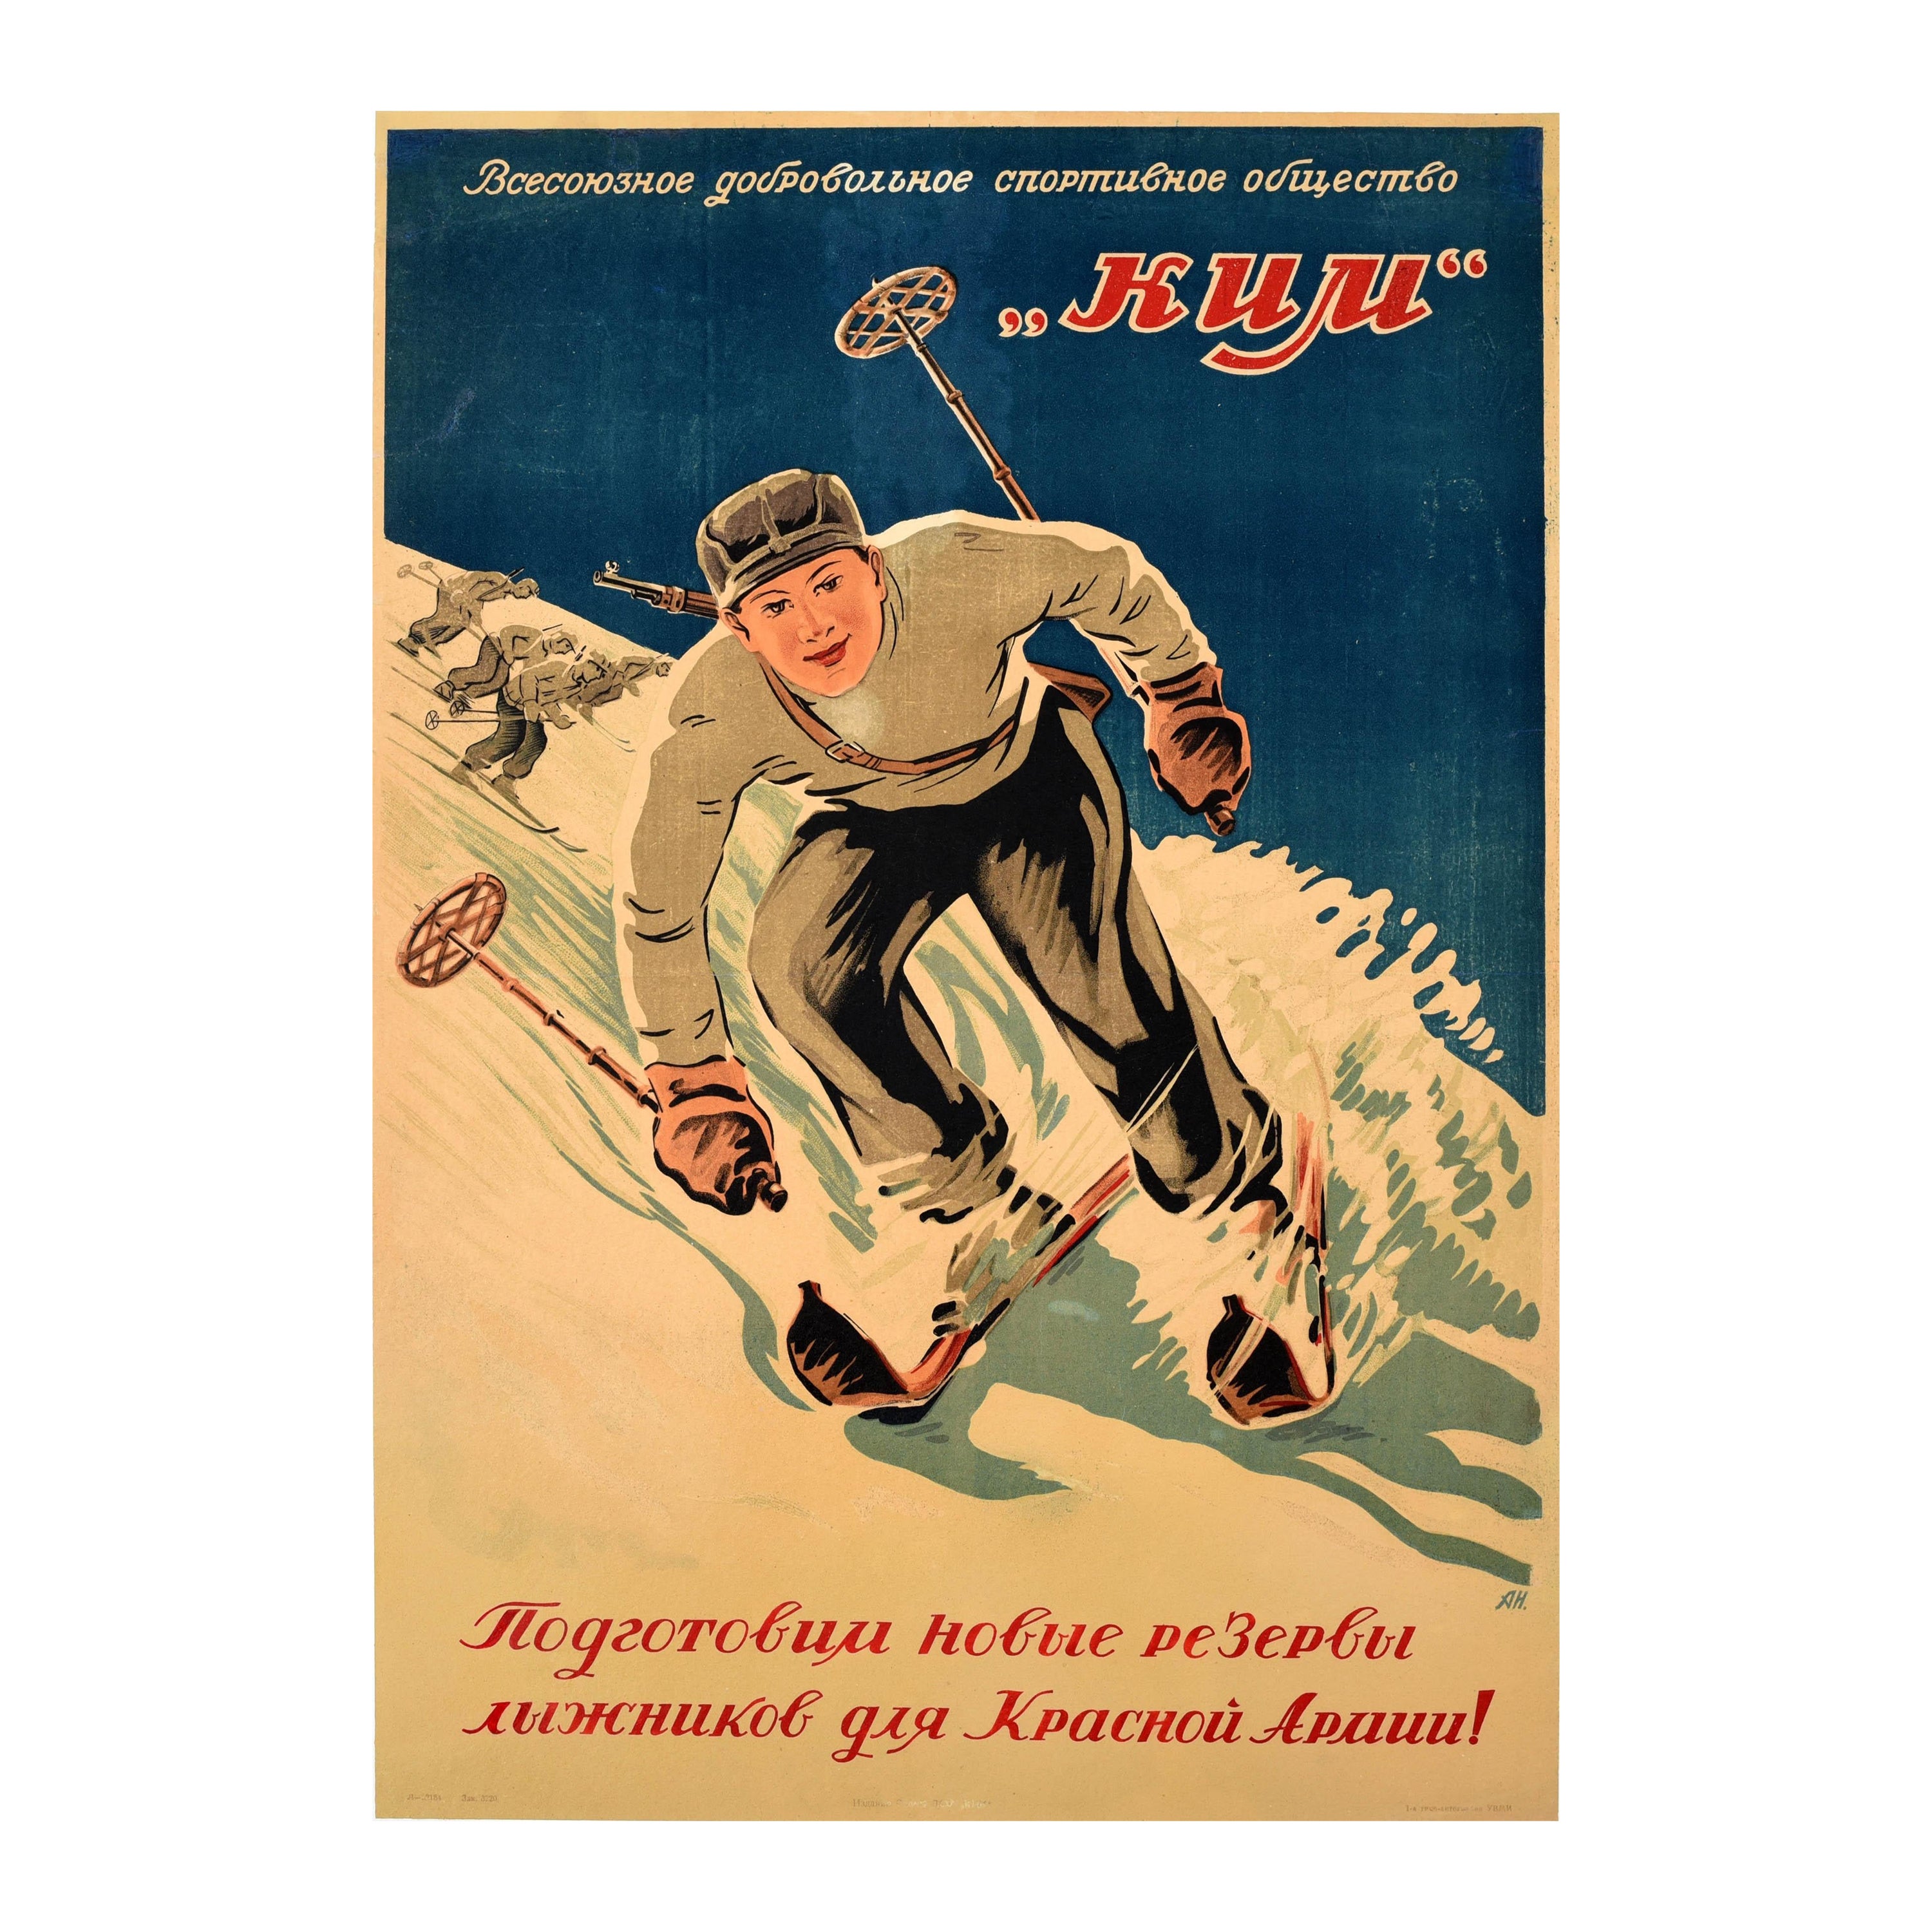 Affiche rétro originale soviétique Skiers Red Army KIM Sports Society, Ski, URSS en vente